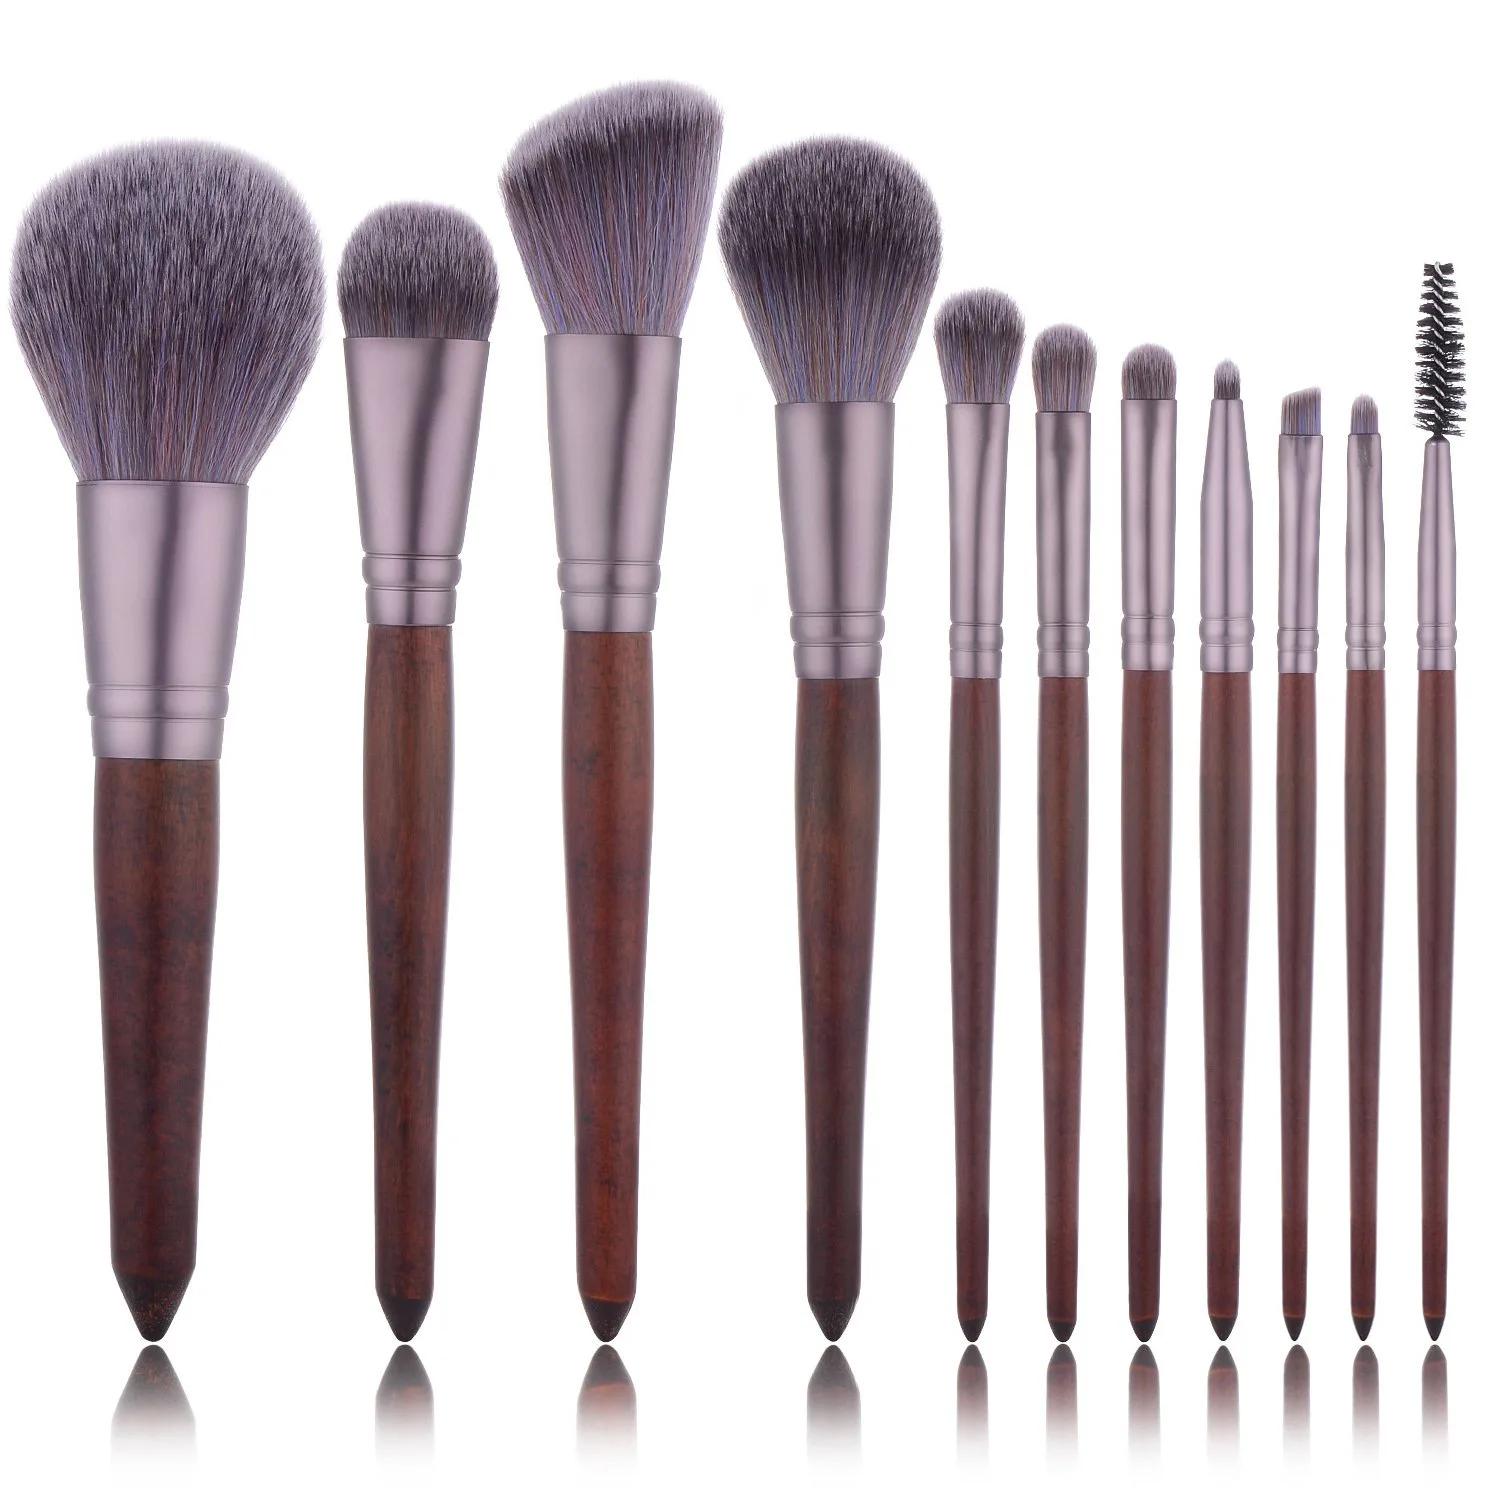 

11pcs Makeup Brushes Cosmetic Wooden Foundation Blush Concealer Powder Eyeliner Eyeshadow Brush Set Tool Maquiagem киси для ма